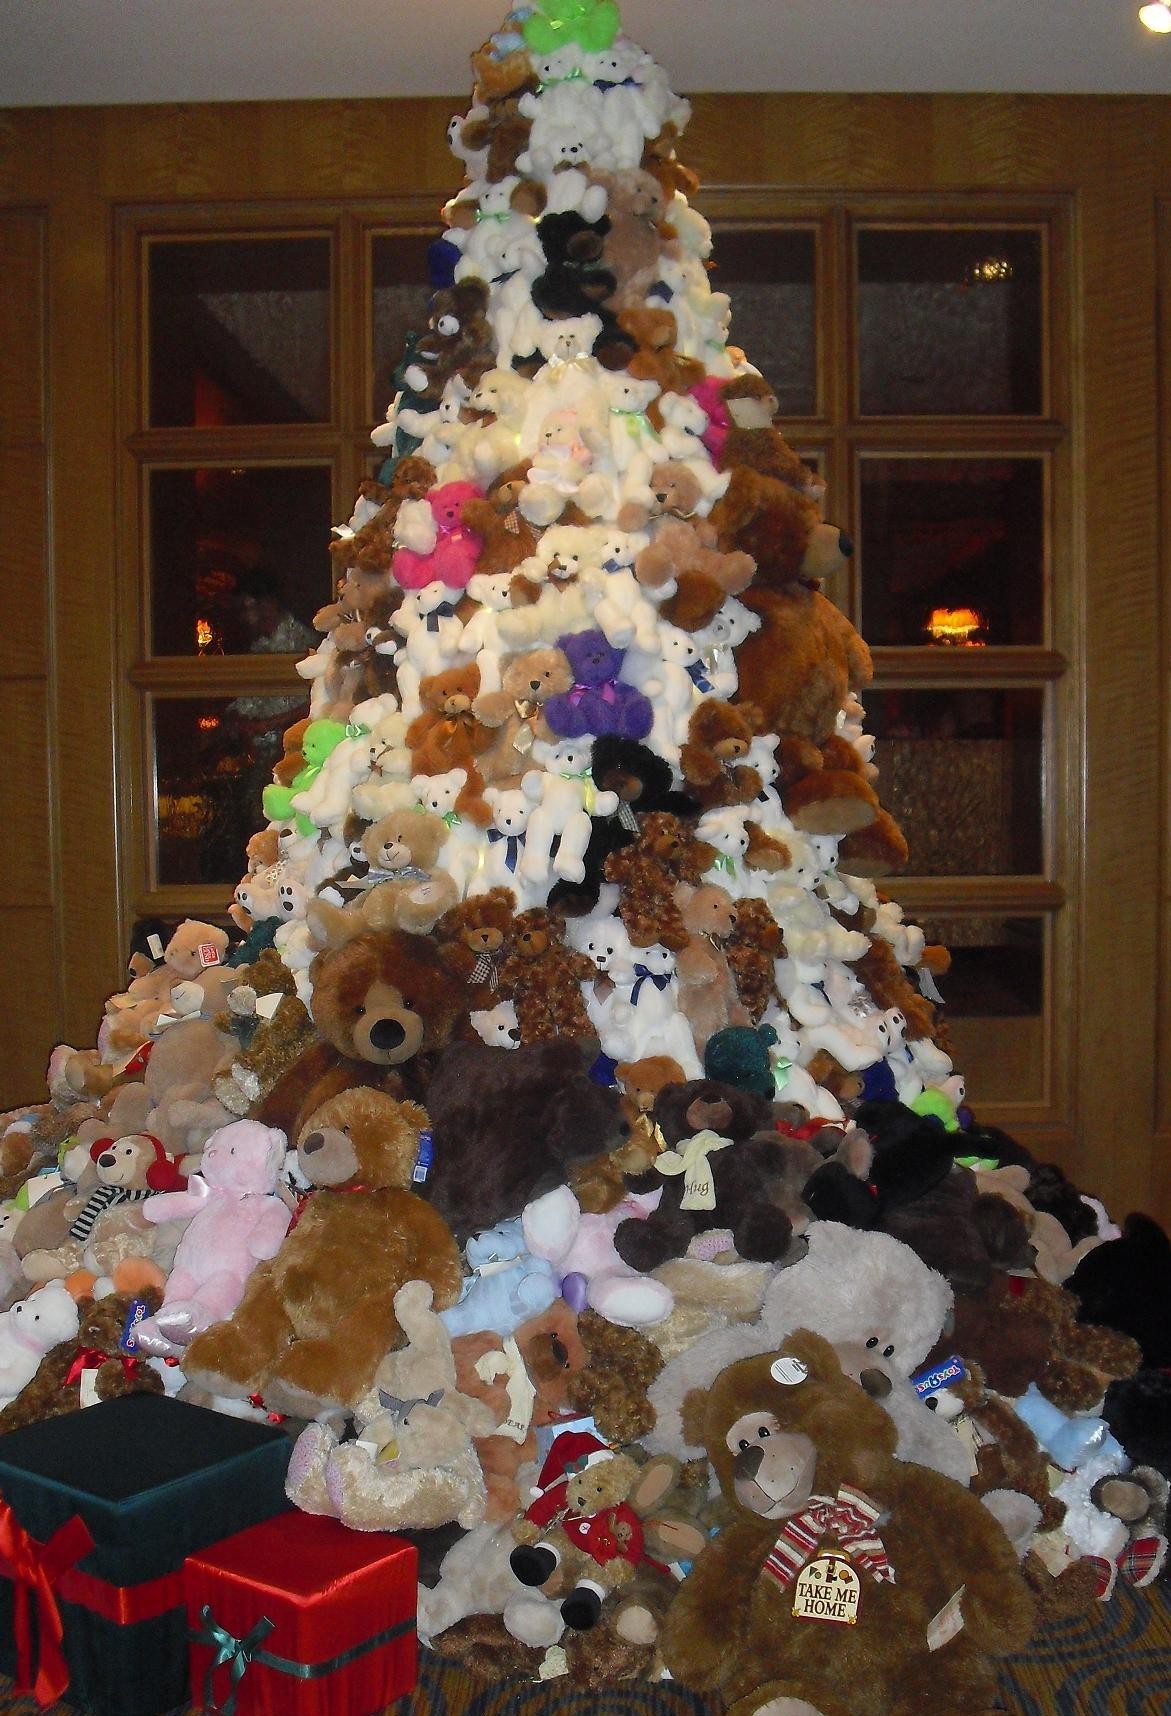 Four Seasons Hotel Boston's Teddy Bear Tree